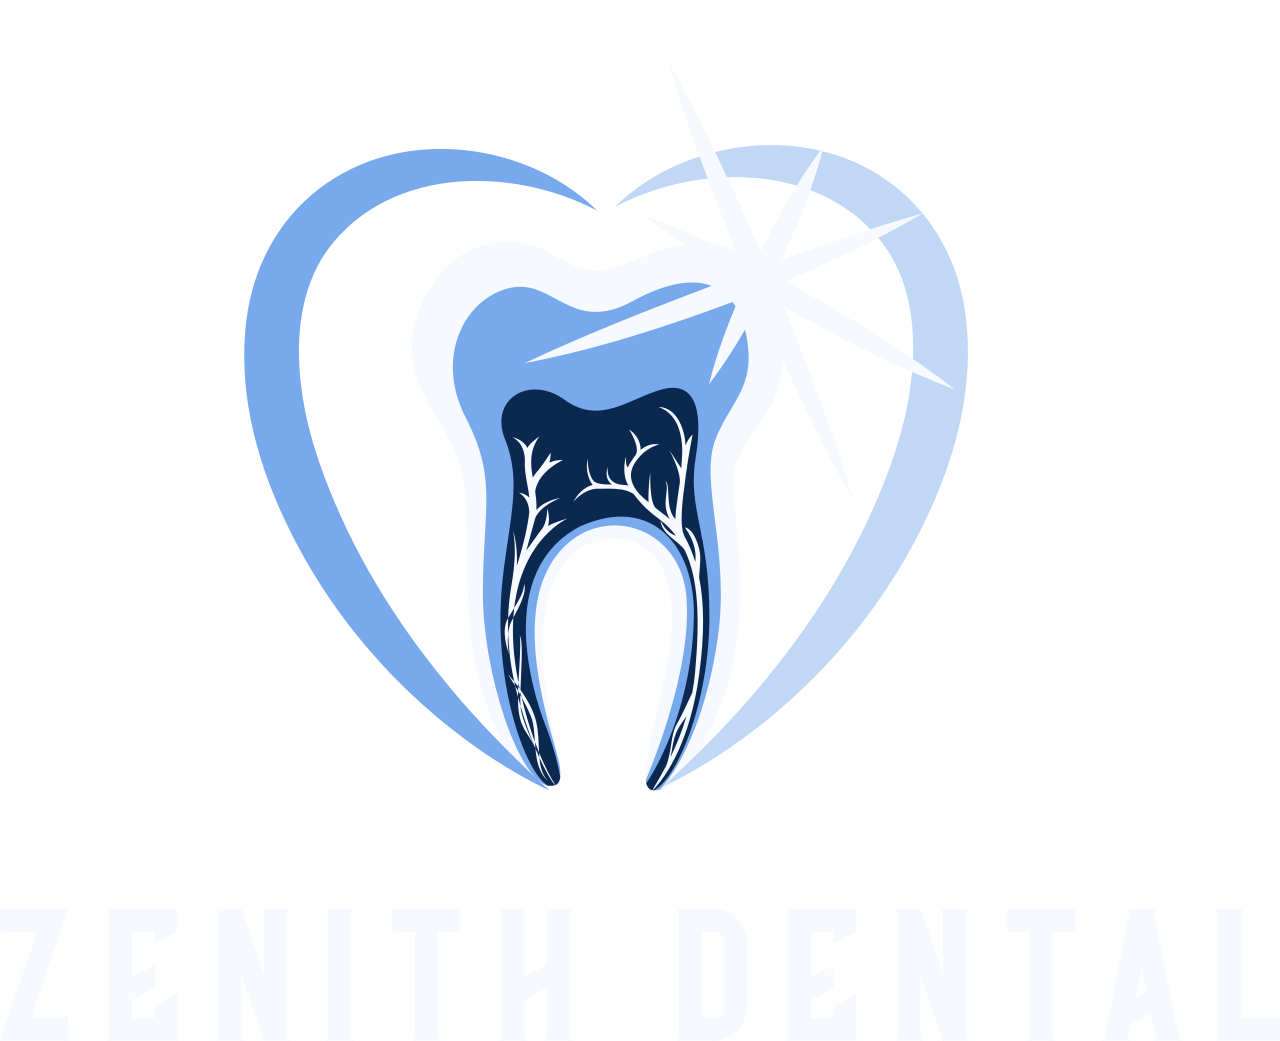 Zenith Dental's logo